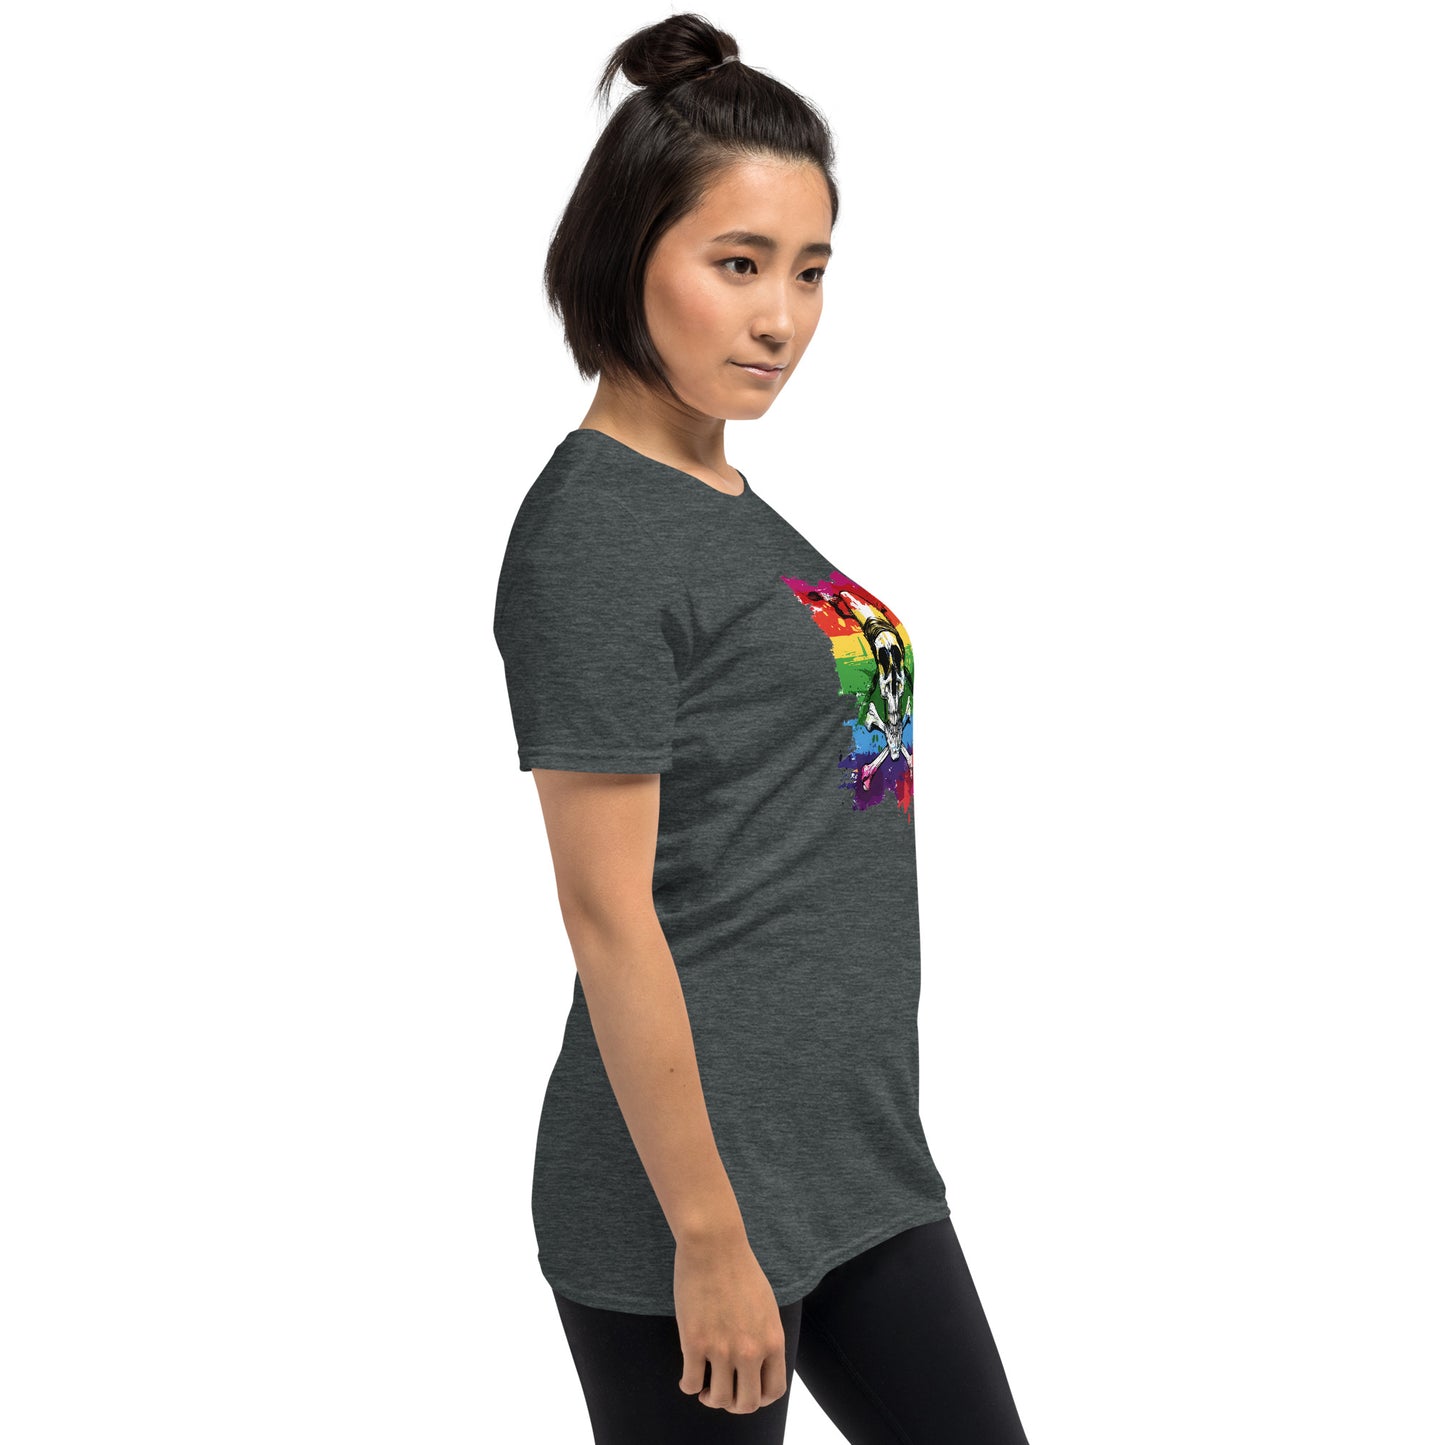 Pirate Rainbow Skull Flag Pride T-Shirt